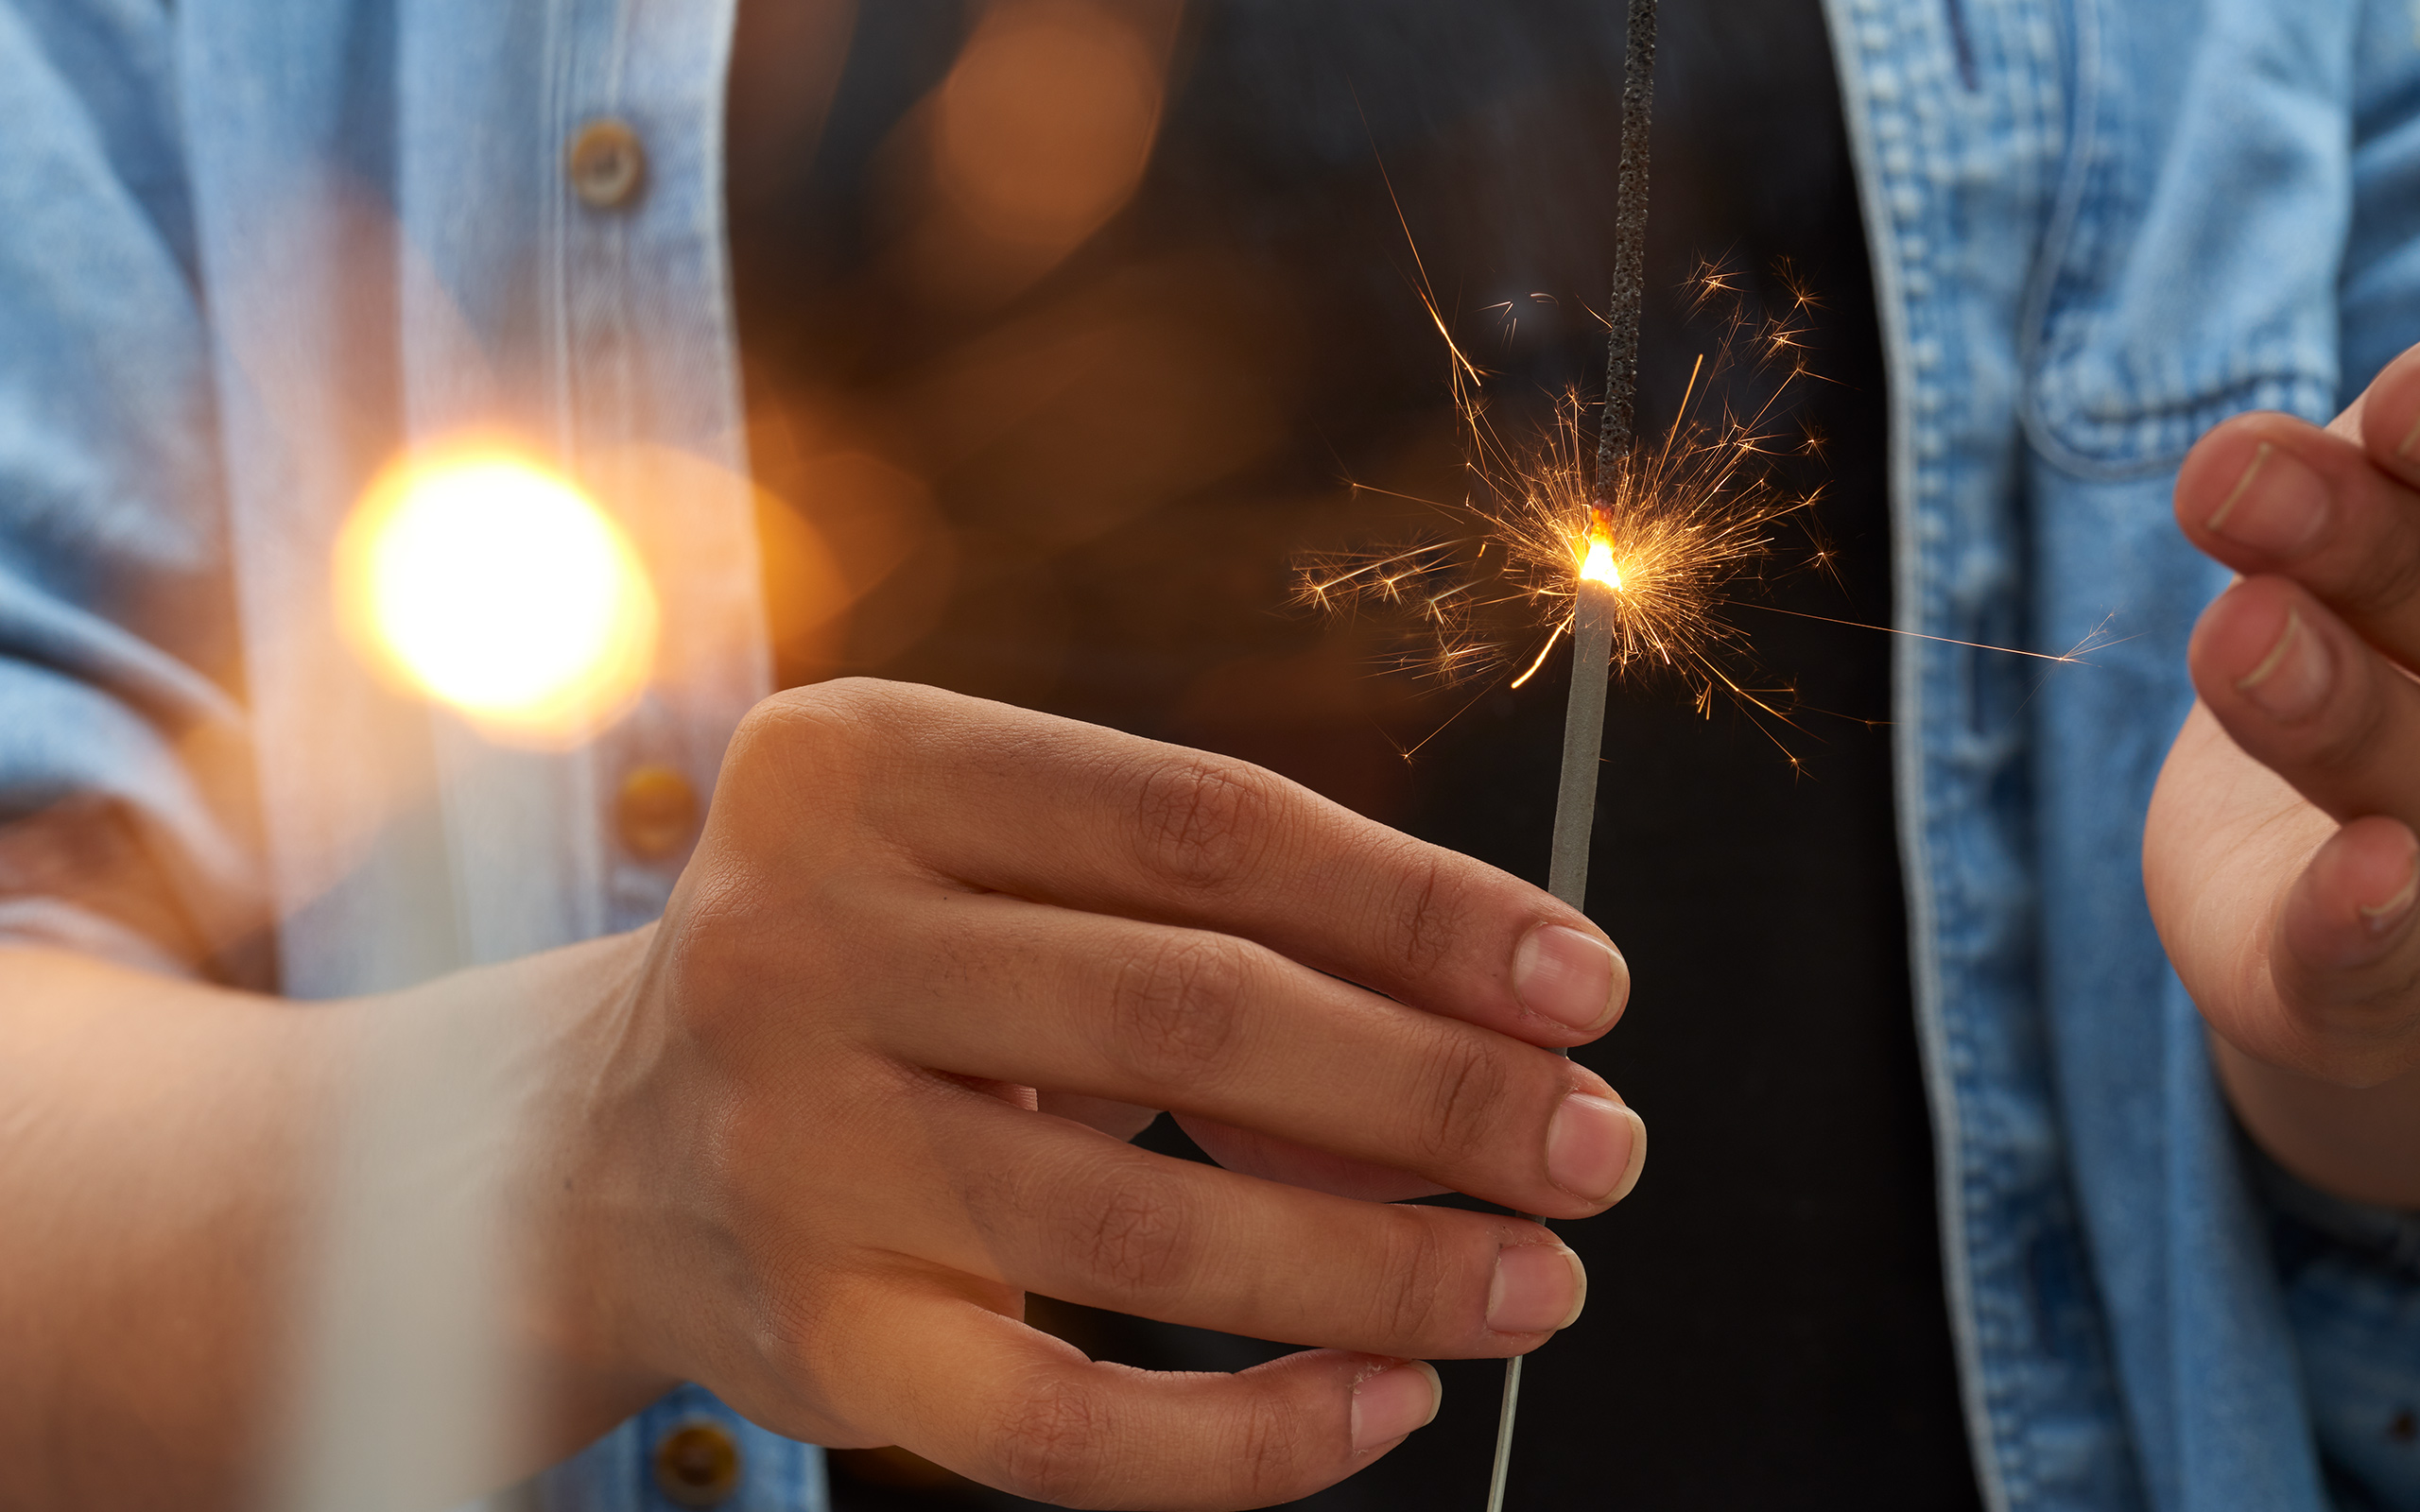 Closeup of a hand holding a burning fireworks sparkler.